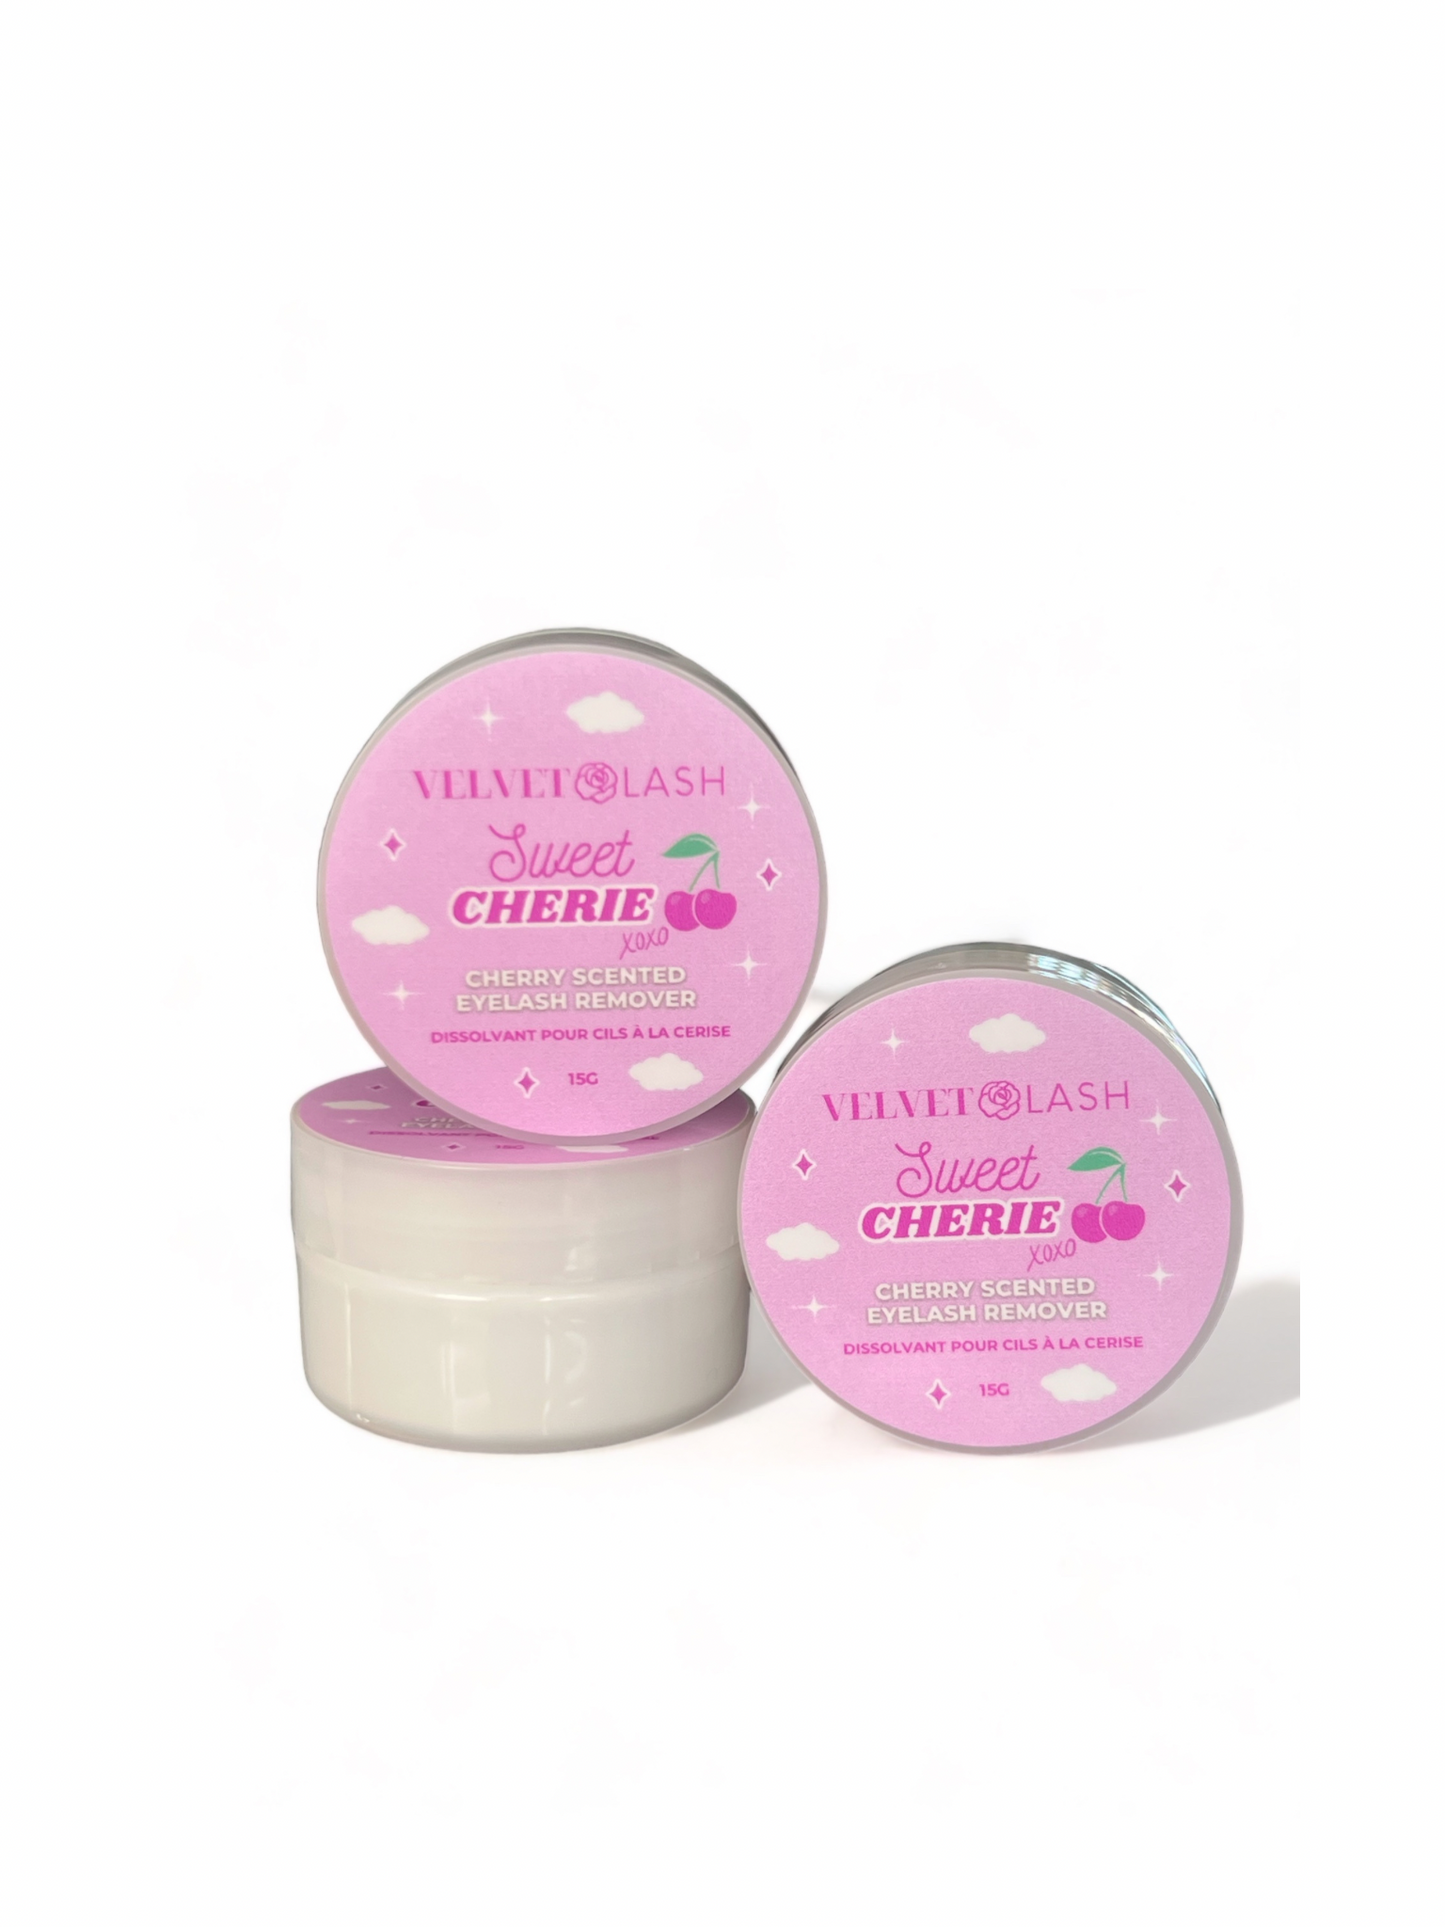 Sweet Cherie Cream Remover - Cherry Scented